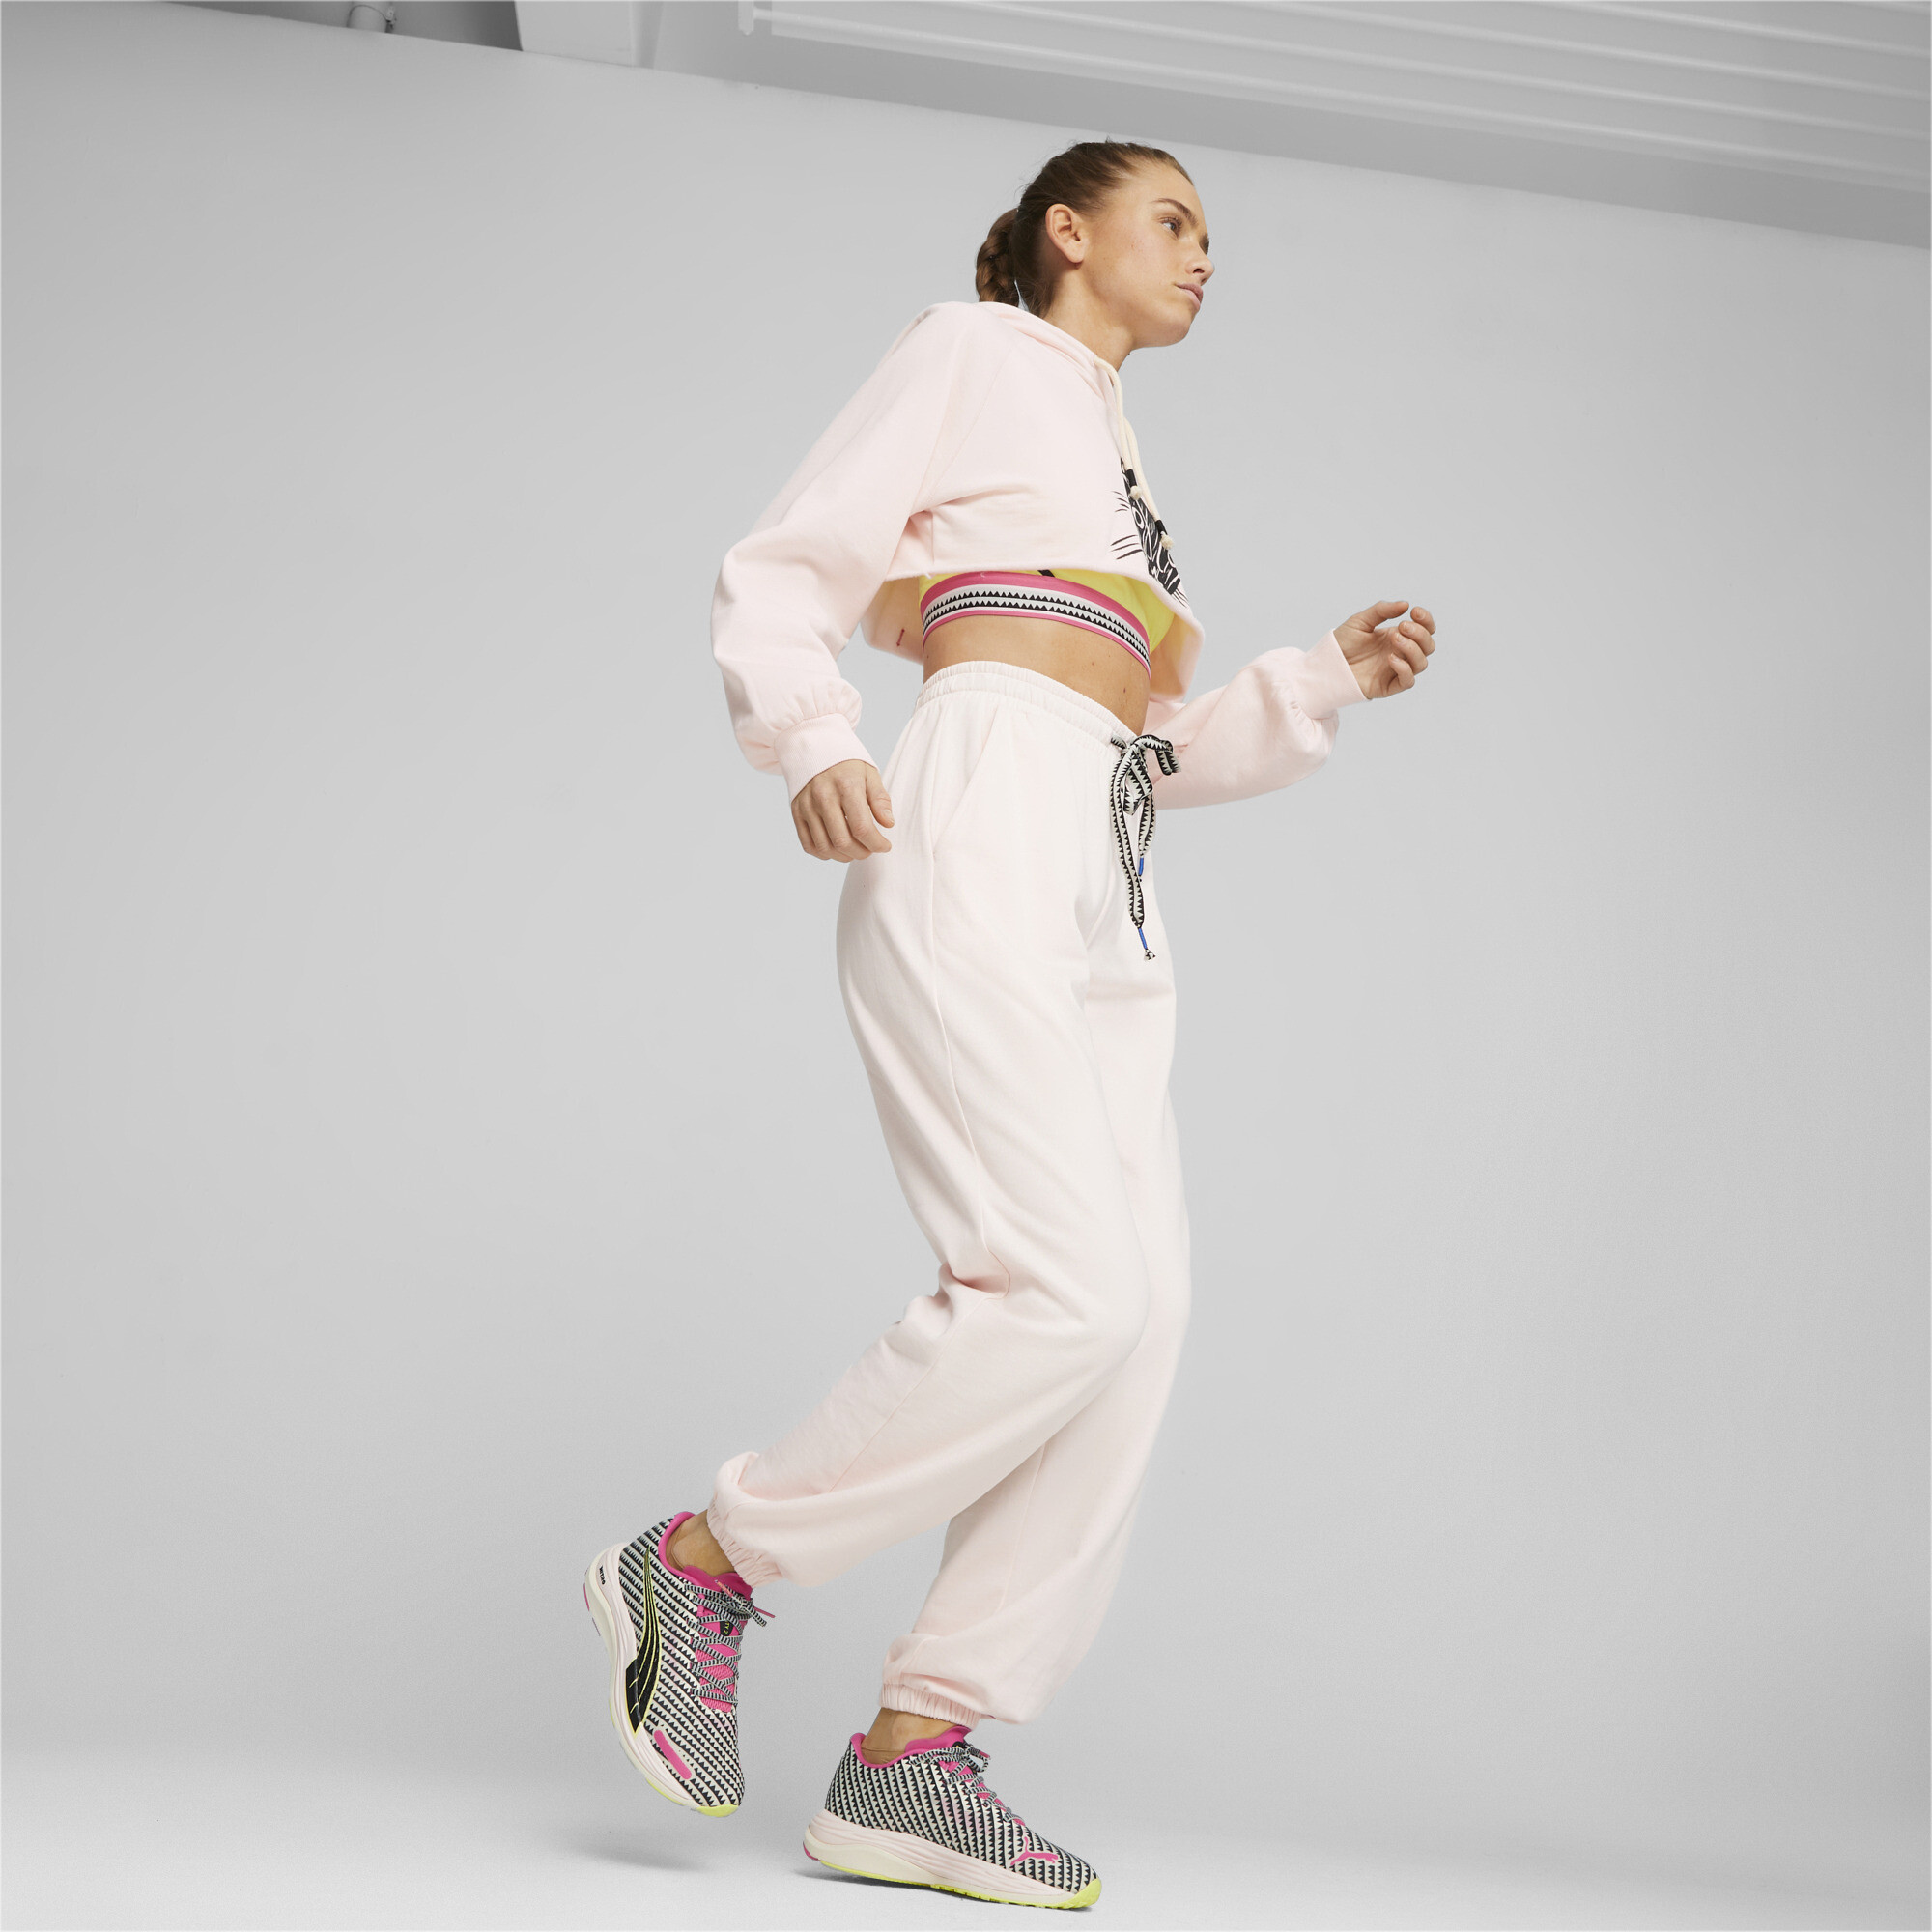 Women's PUMA X Lemlem Velocity NITRO 2 Running Shoes Women In Beige, Size EU 37.5